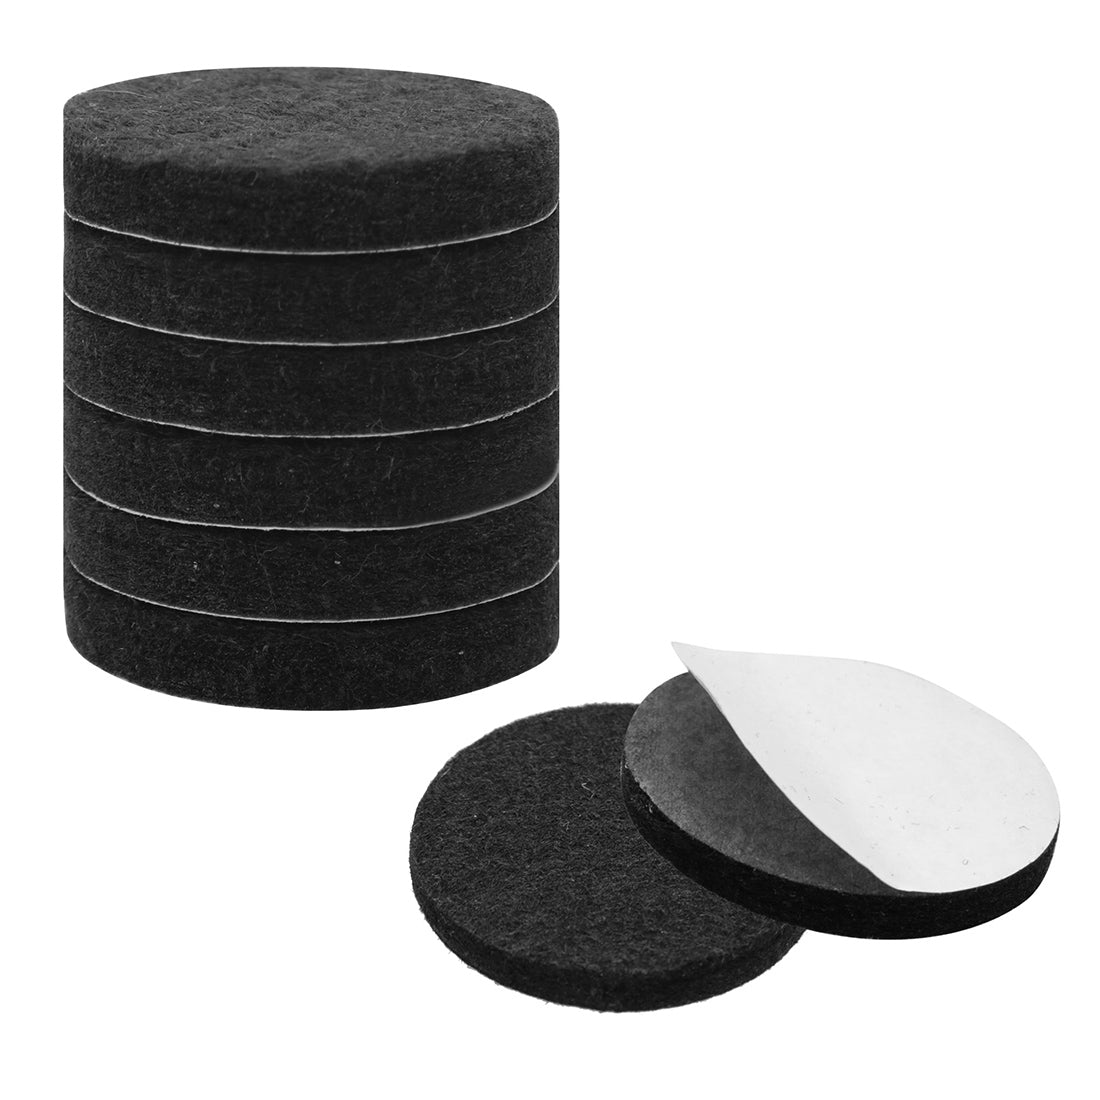 uxcell Uxcell Felt Pads Round Dia Self Stick Desk Leg Pad Floor Protector Black, 8pcs